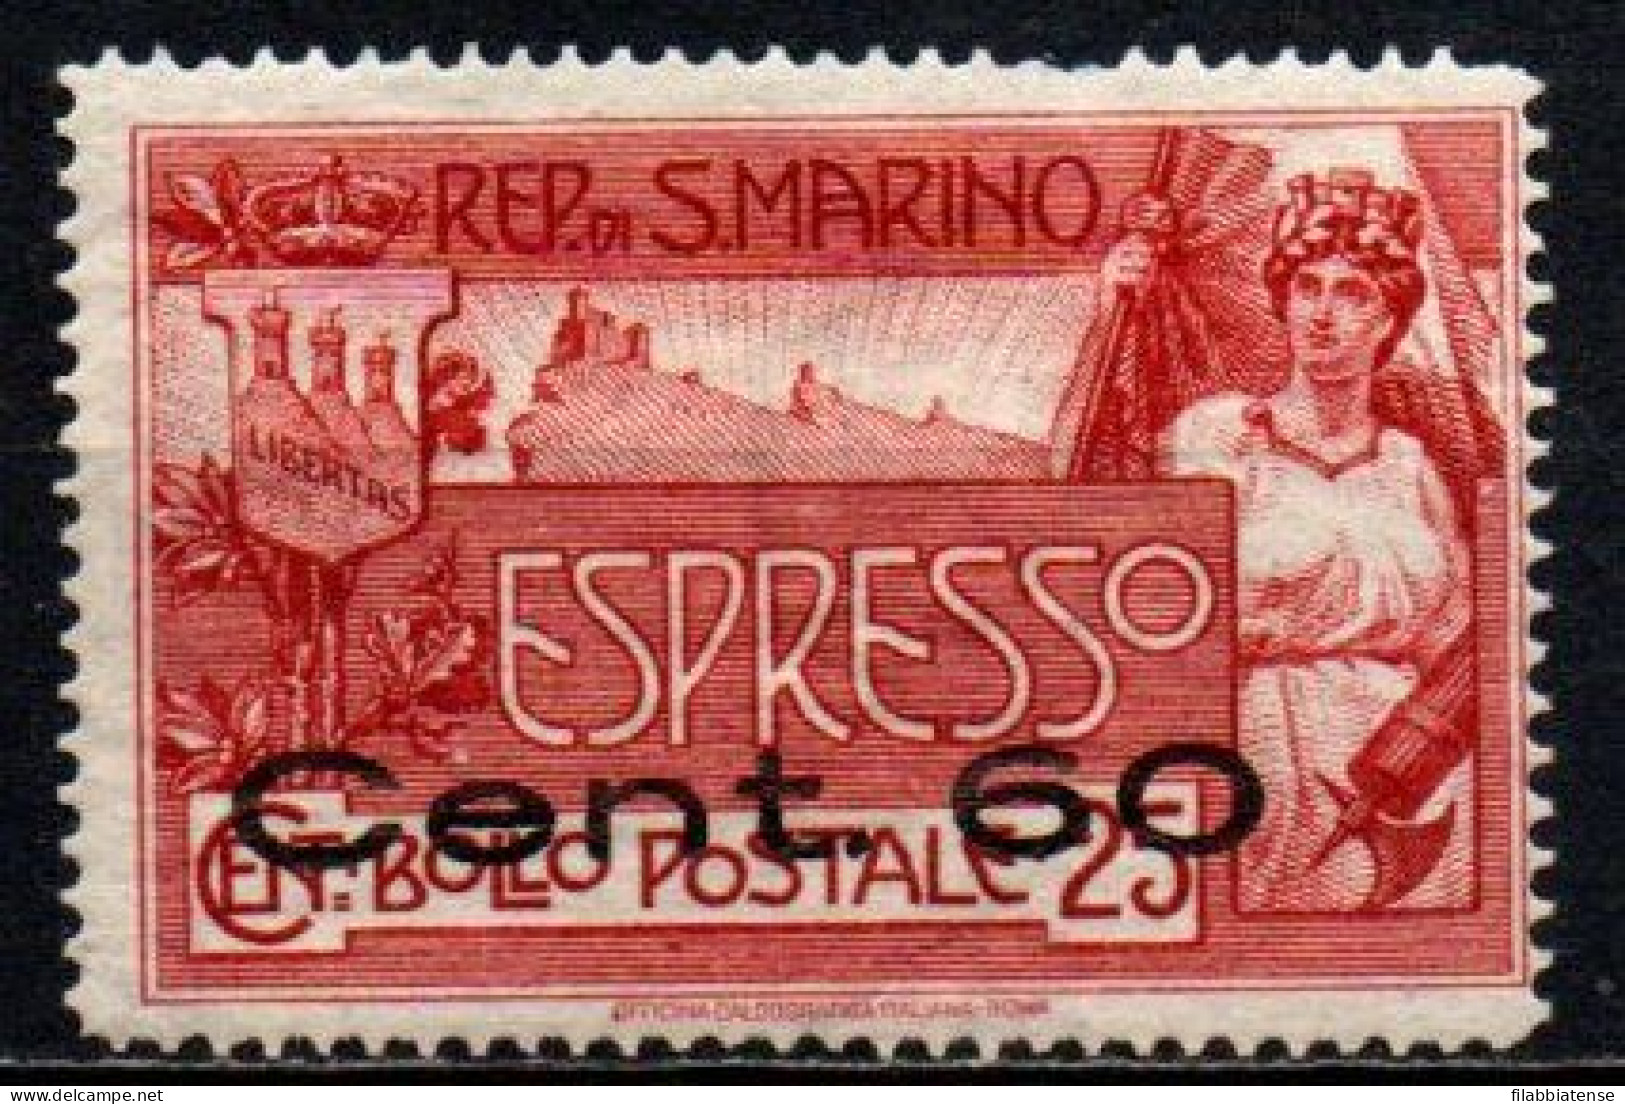 1923 - San Marino E 3 Espresso  ++++++ - Ongebruikt